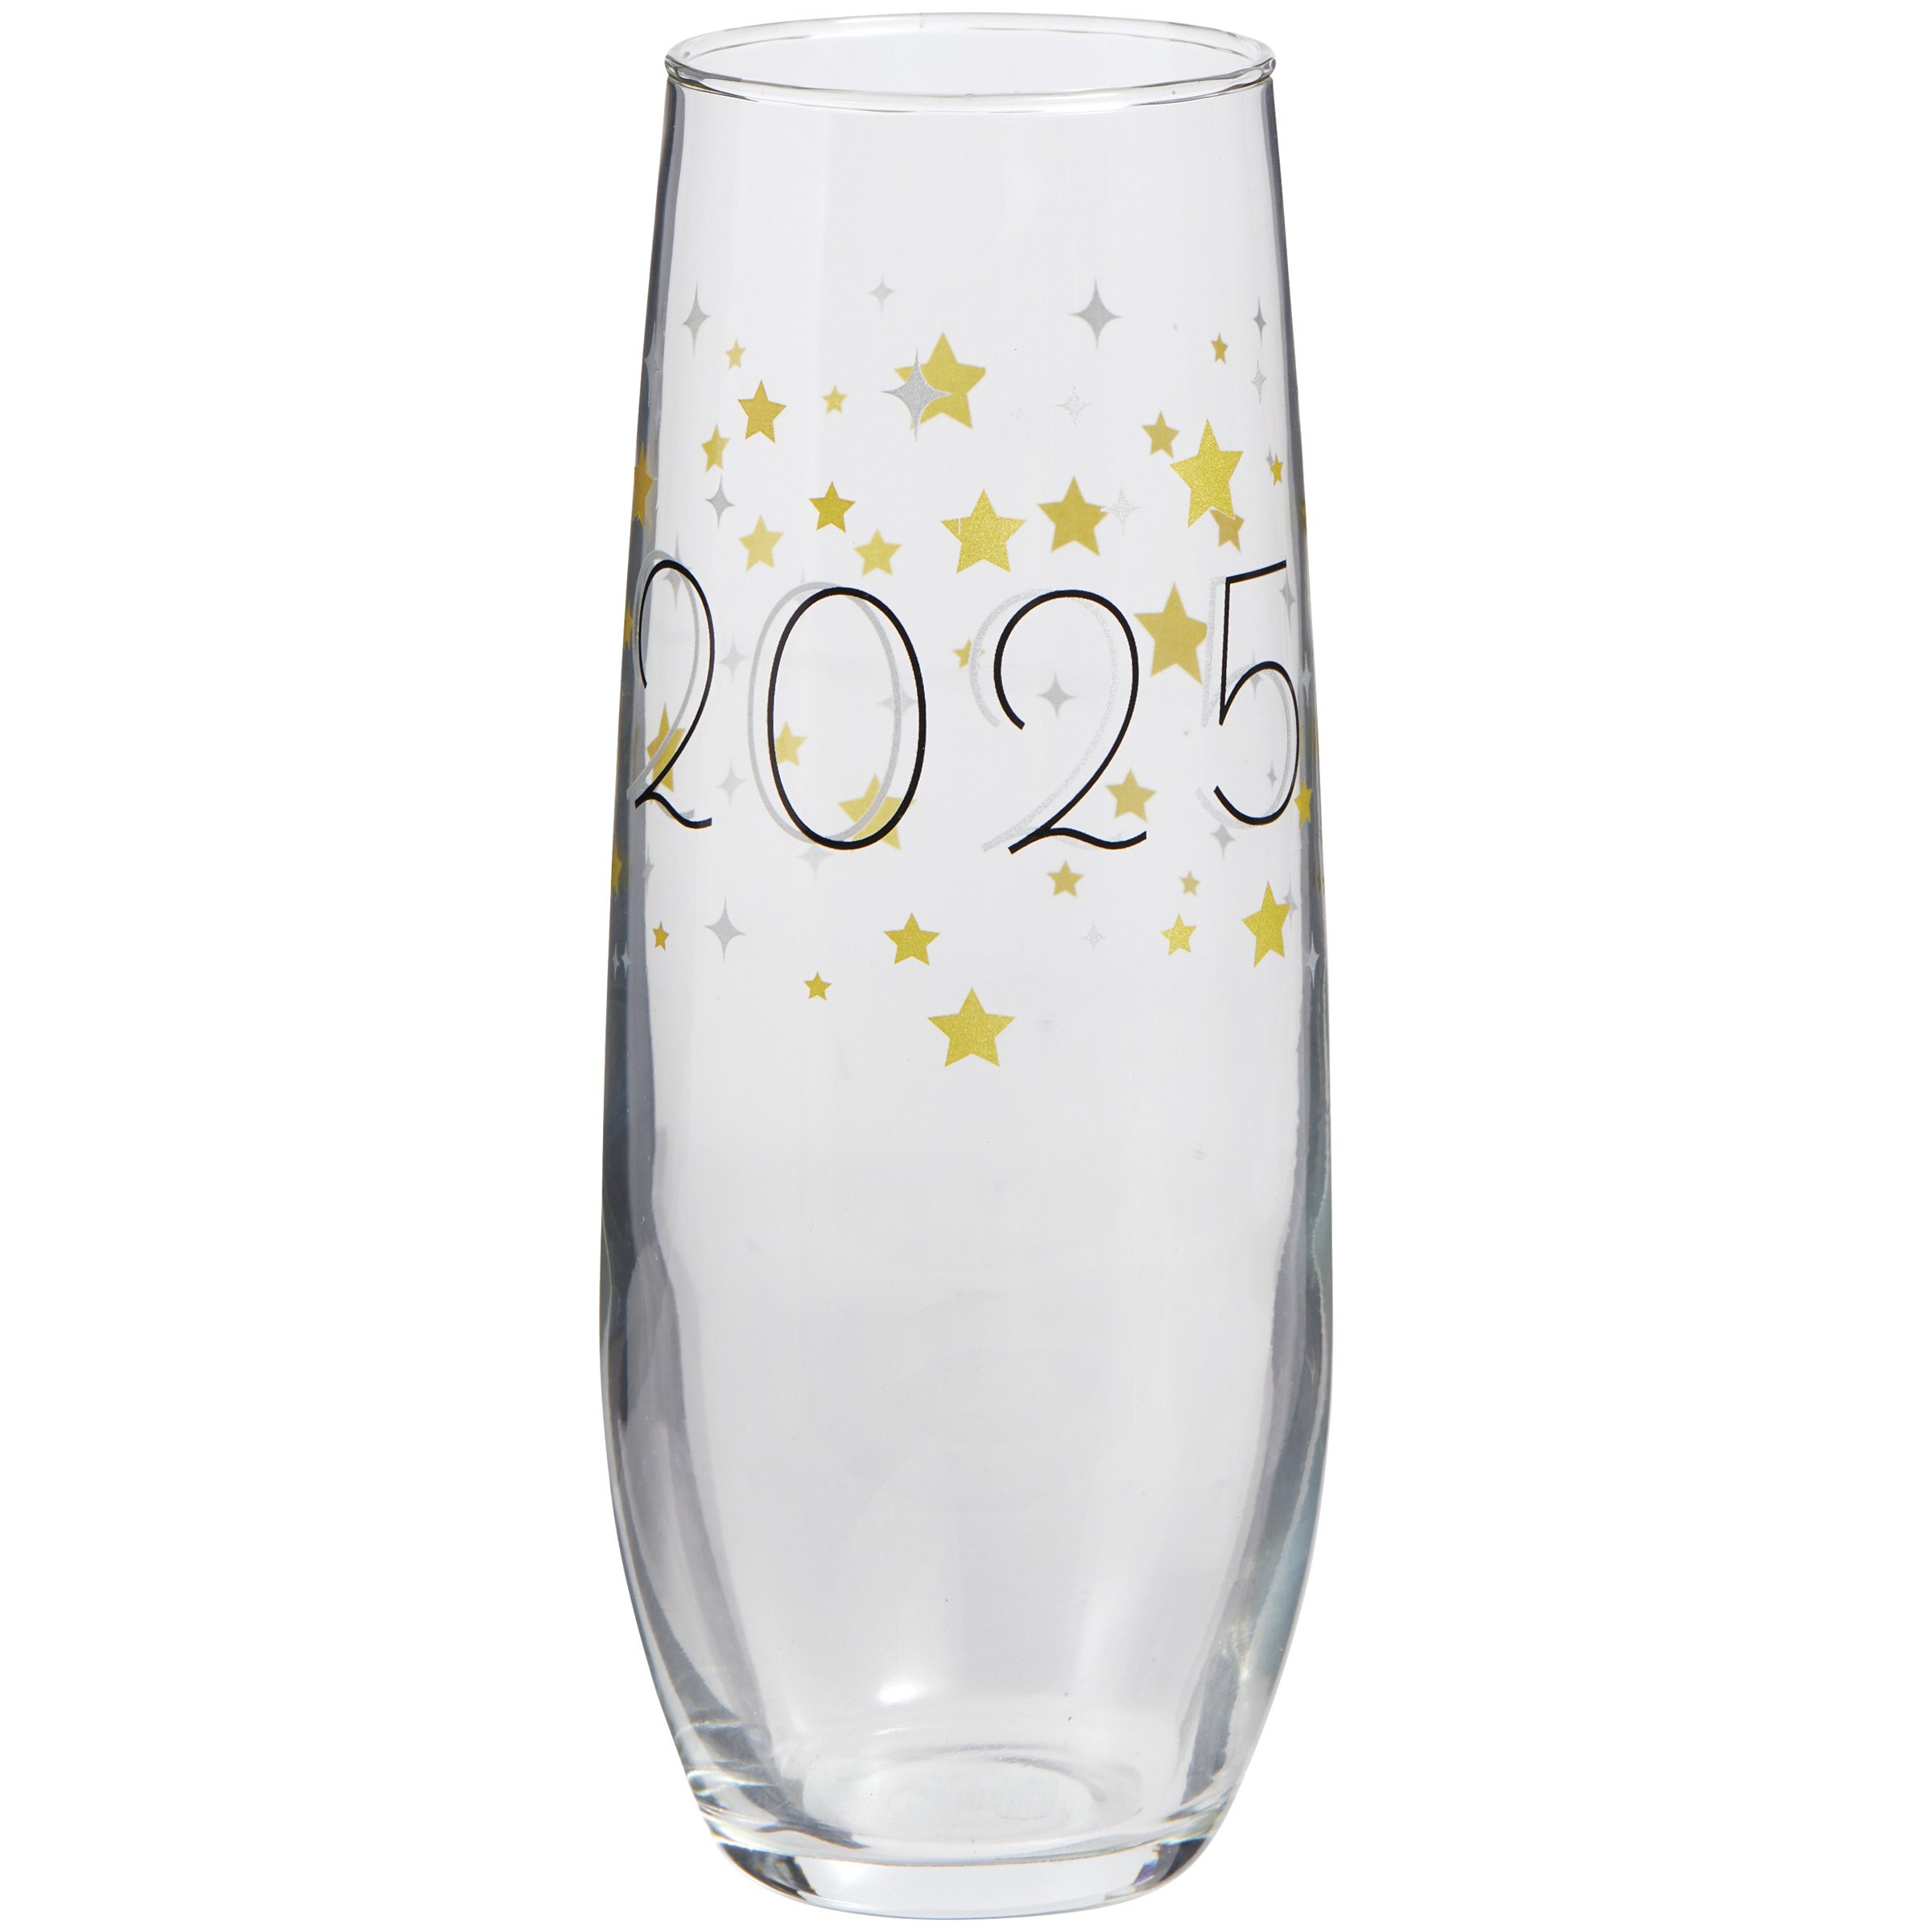 Cool Drinking Glasses & Glassware 2024